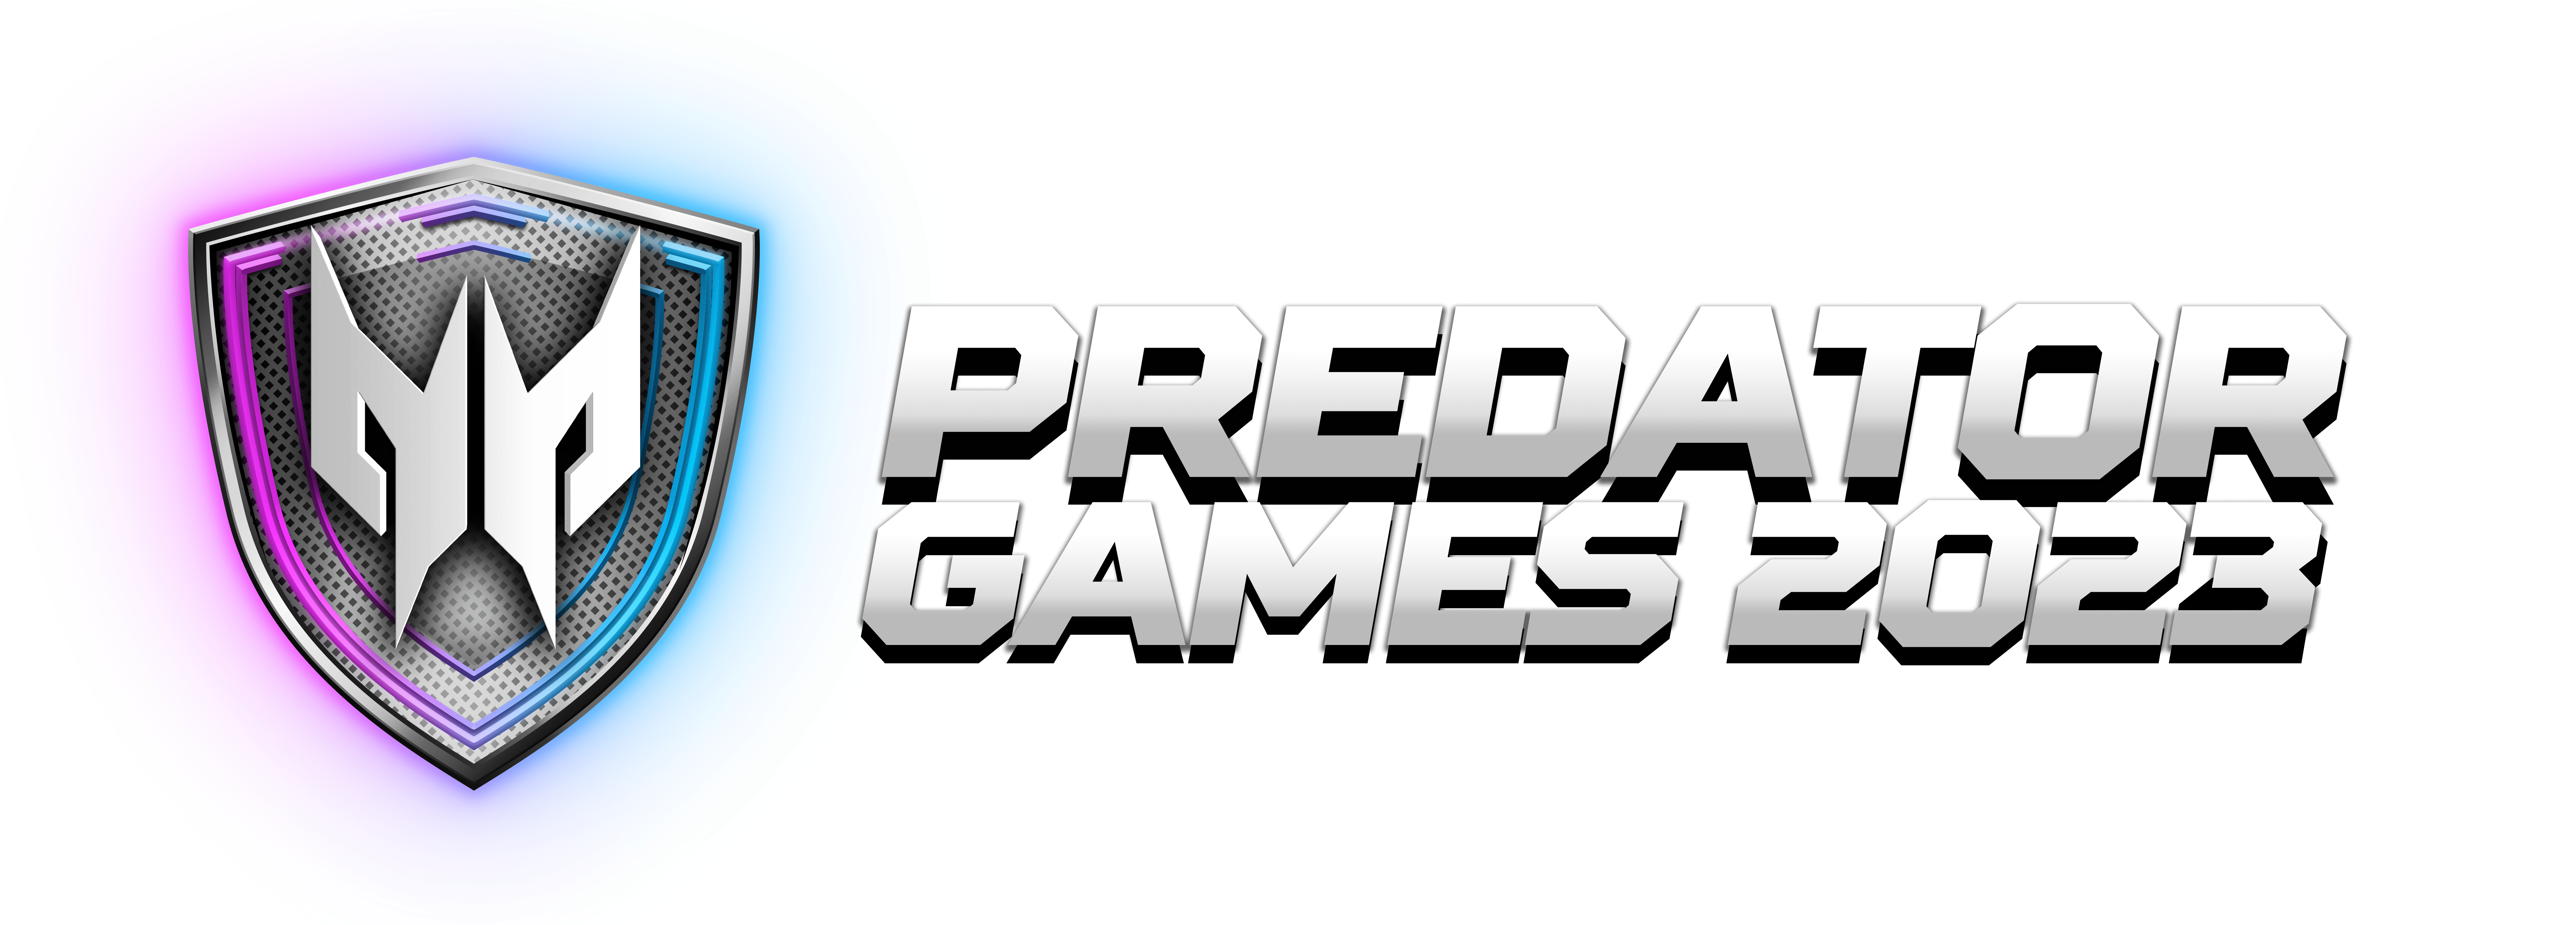 I edycja Predator Games